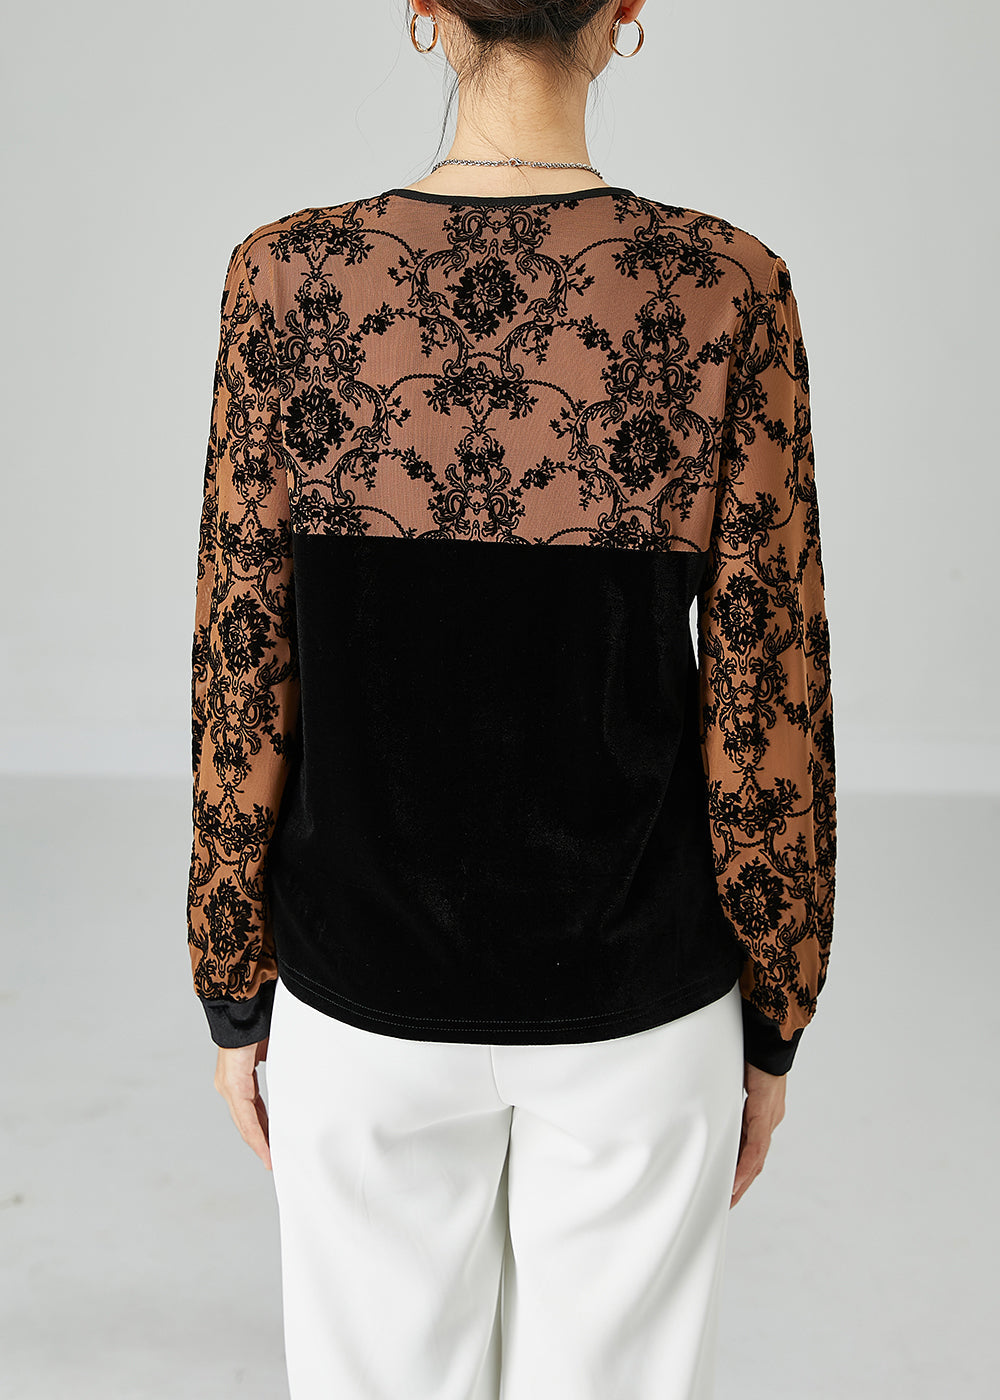 Fashion Black Square Collar Patchwork Jacquard Silk Velour Shirt Top Spring LY2453 - fabuloryshop